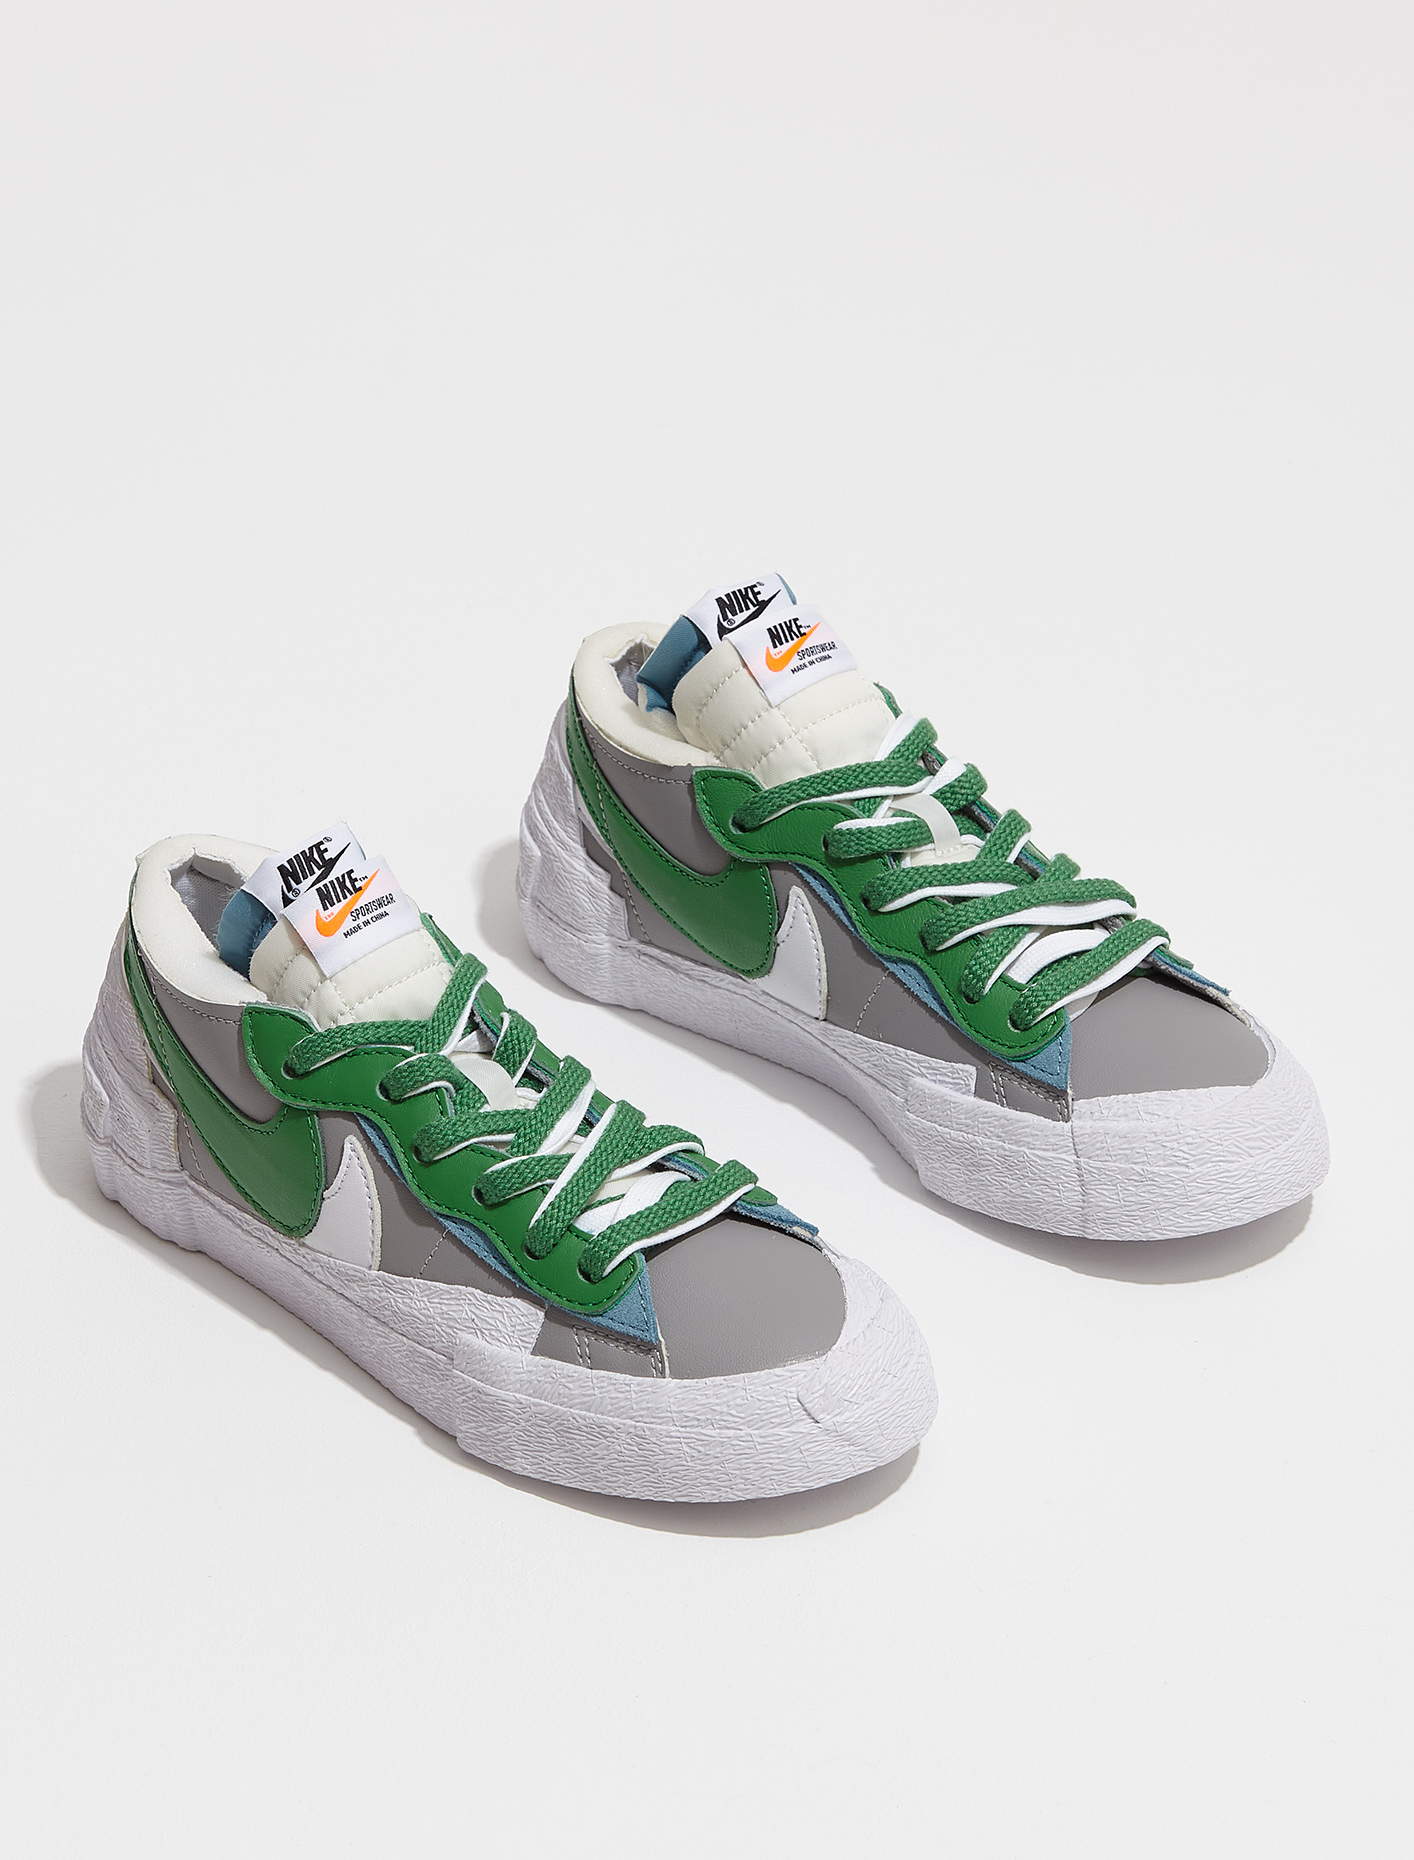 Nike x Sacai Blazer Low in Classic Green (RAFFLE) | Voo Store Berlin